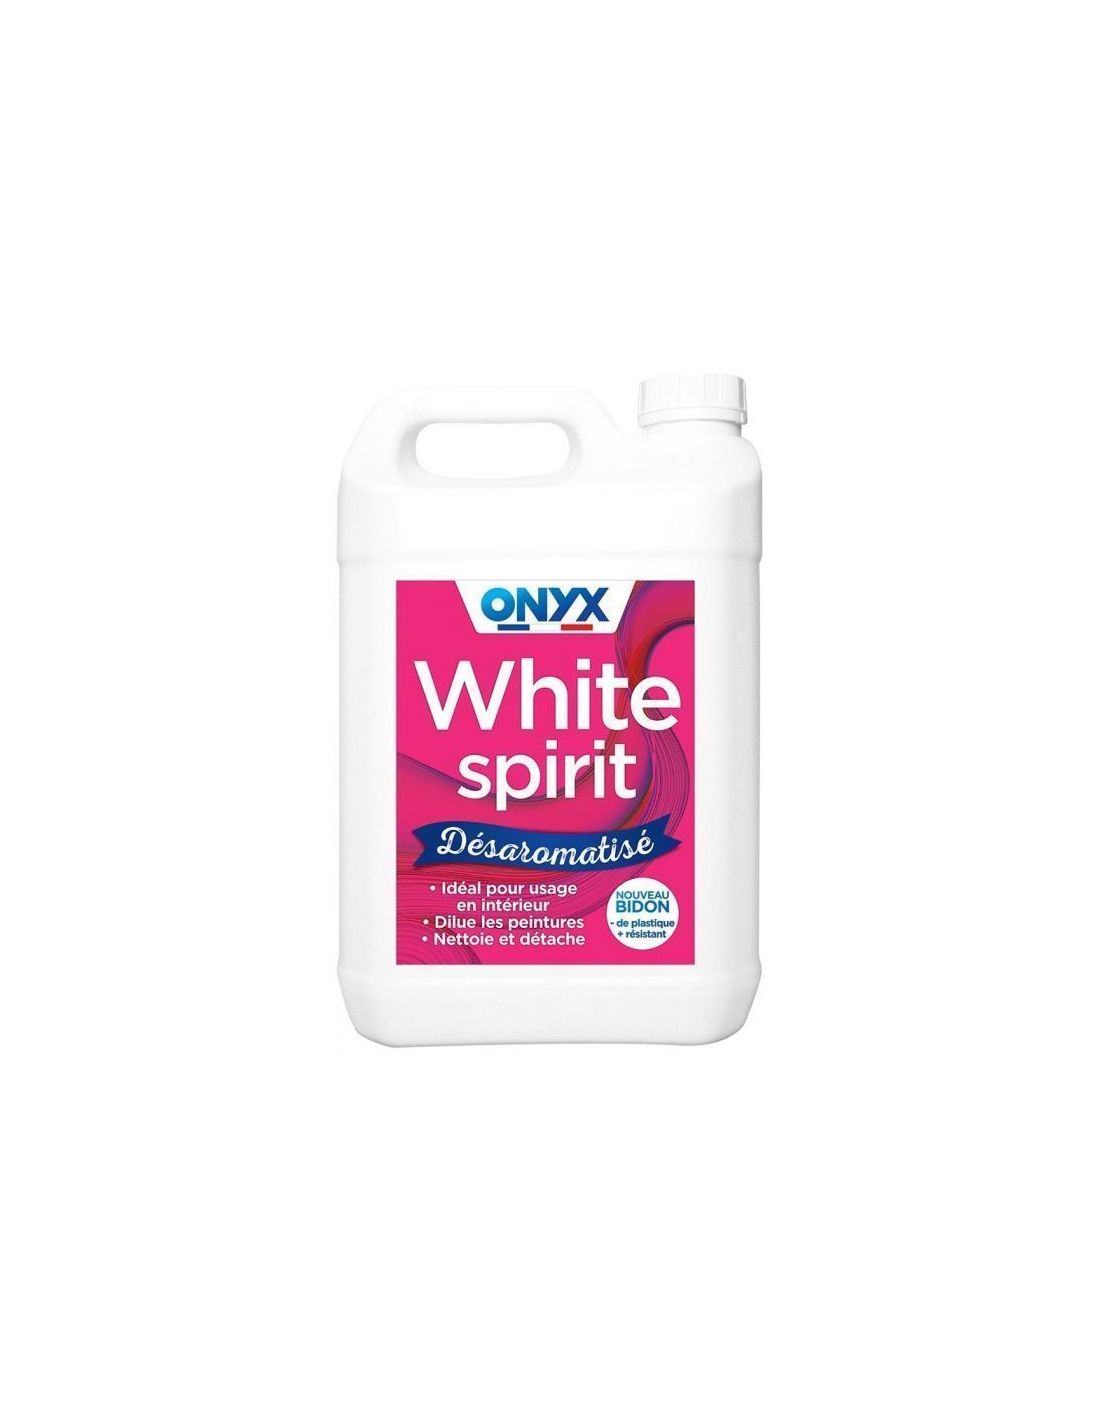 White spirit désaromatisé 1L - ONYX